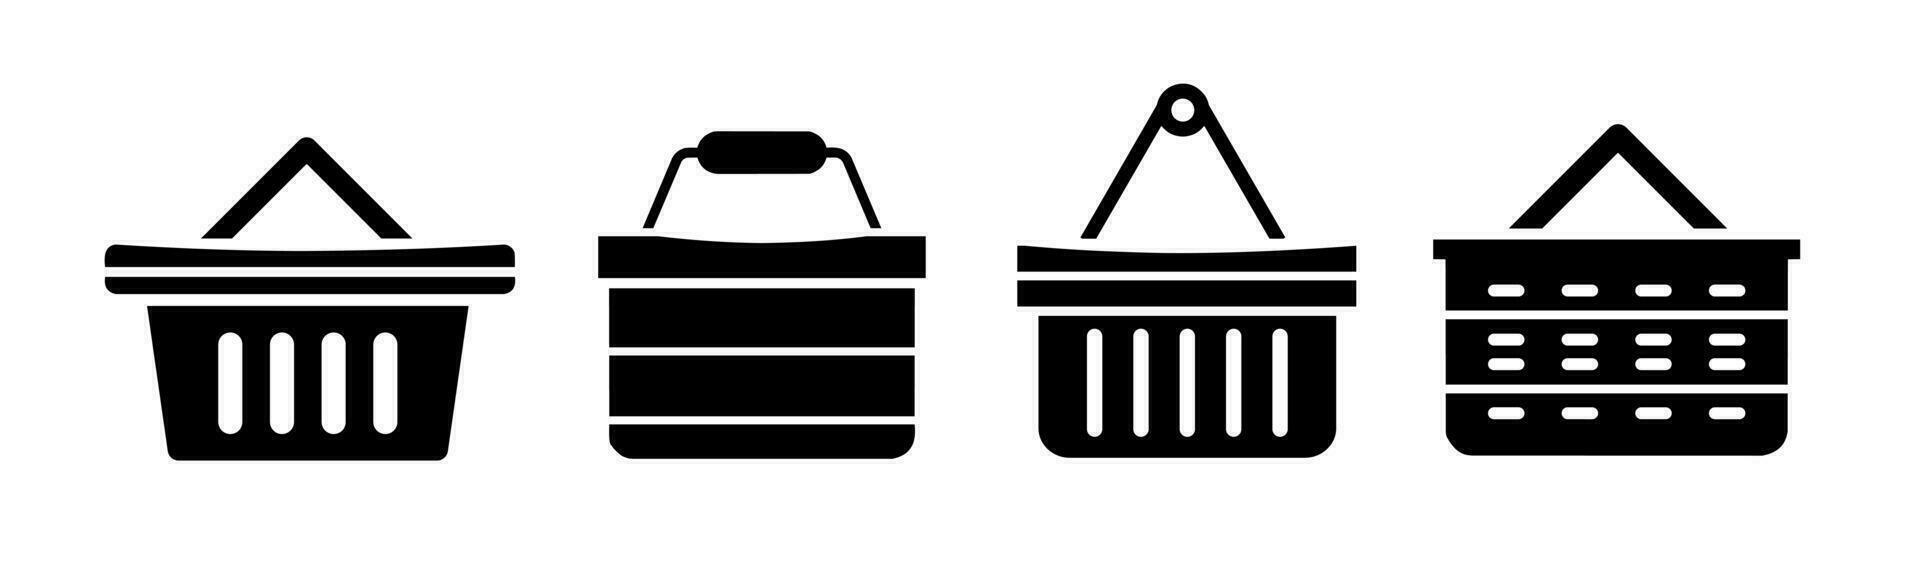 Shopping basket icon collection. An illustration of a black shopping basket icon. Stock vector. vector